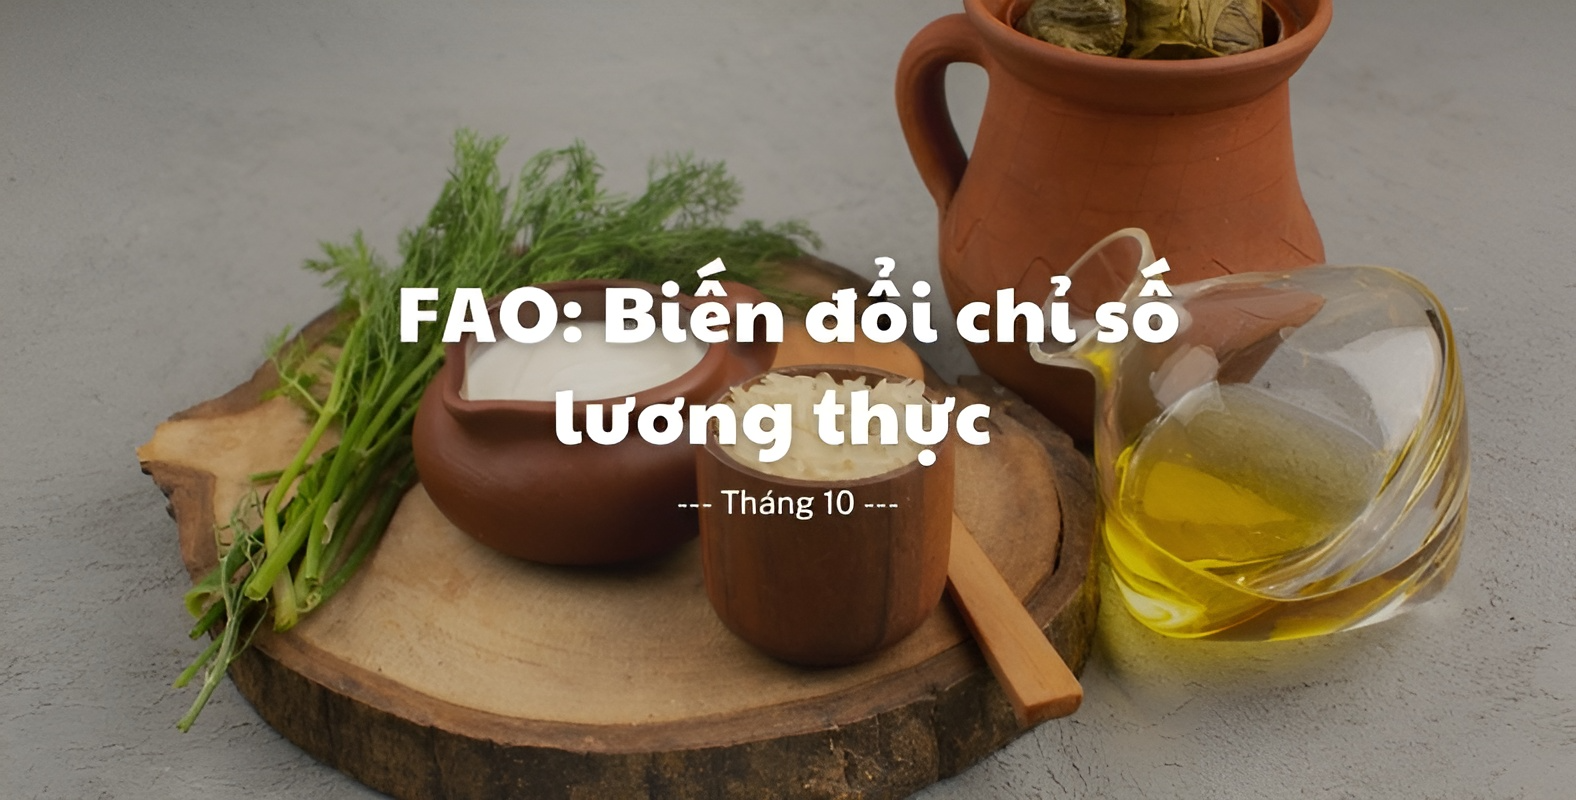 bien-doi-chi-so-luong-thuc